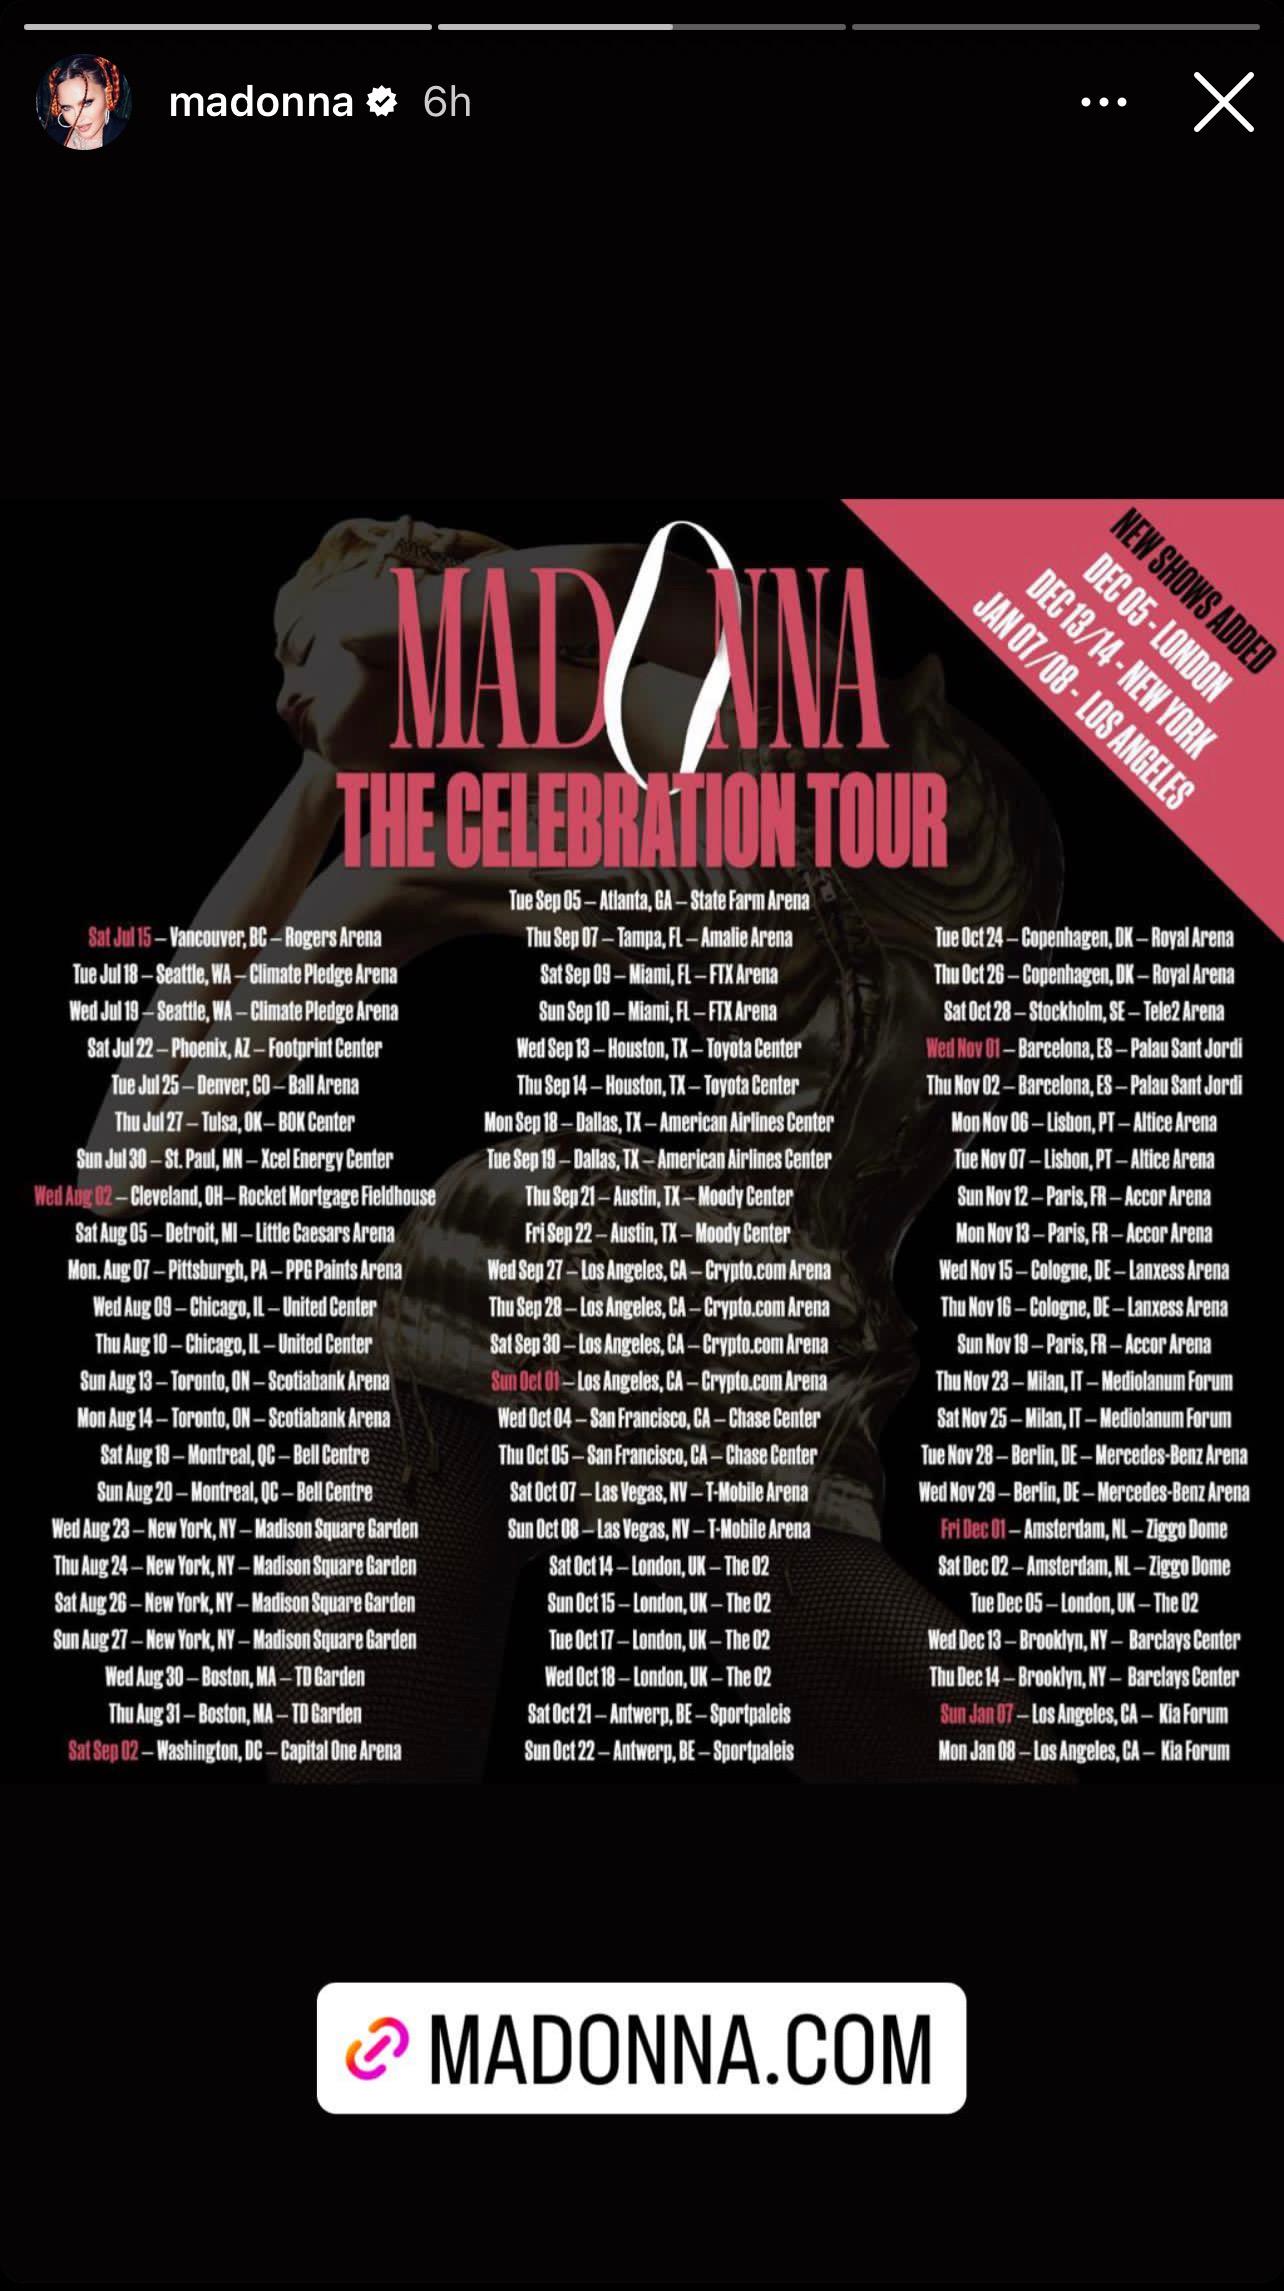 madonna tour dates change